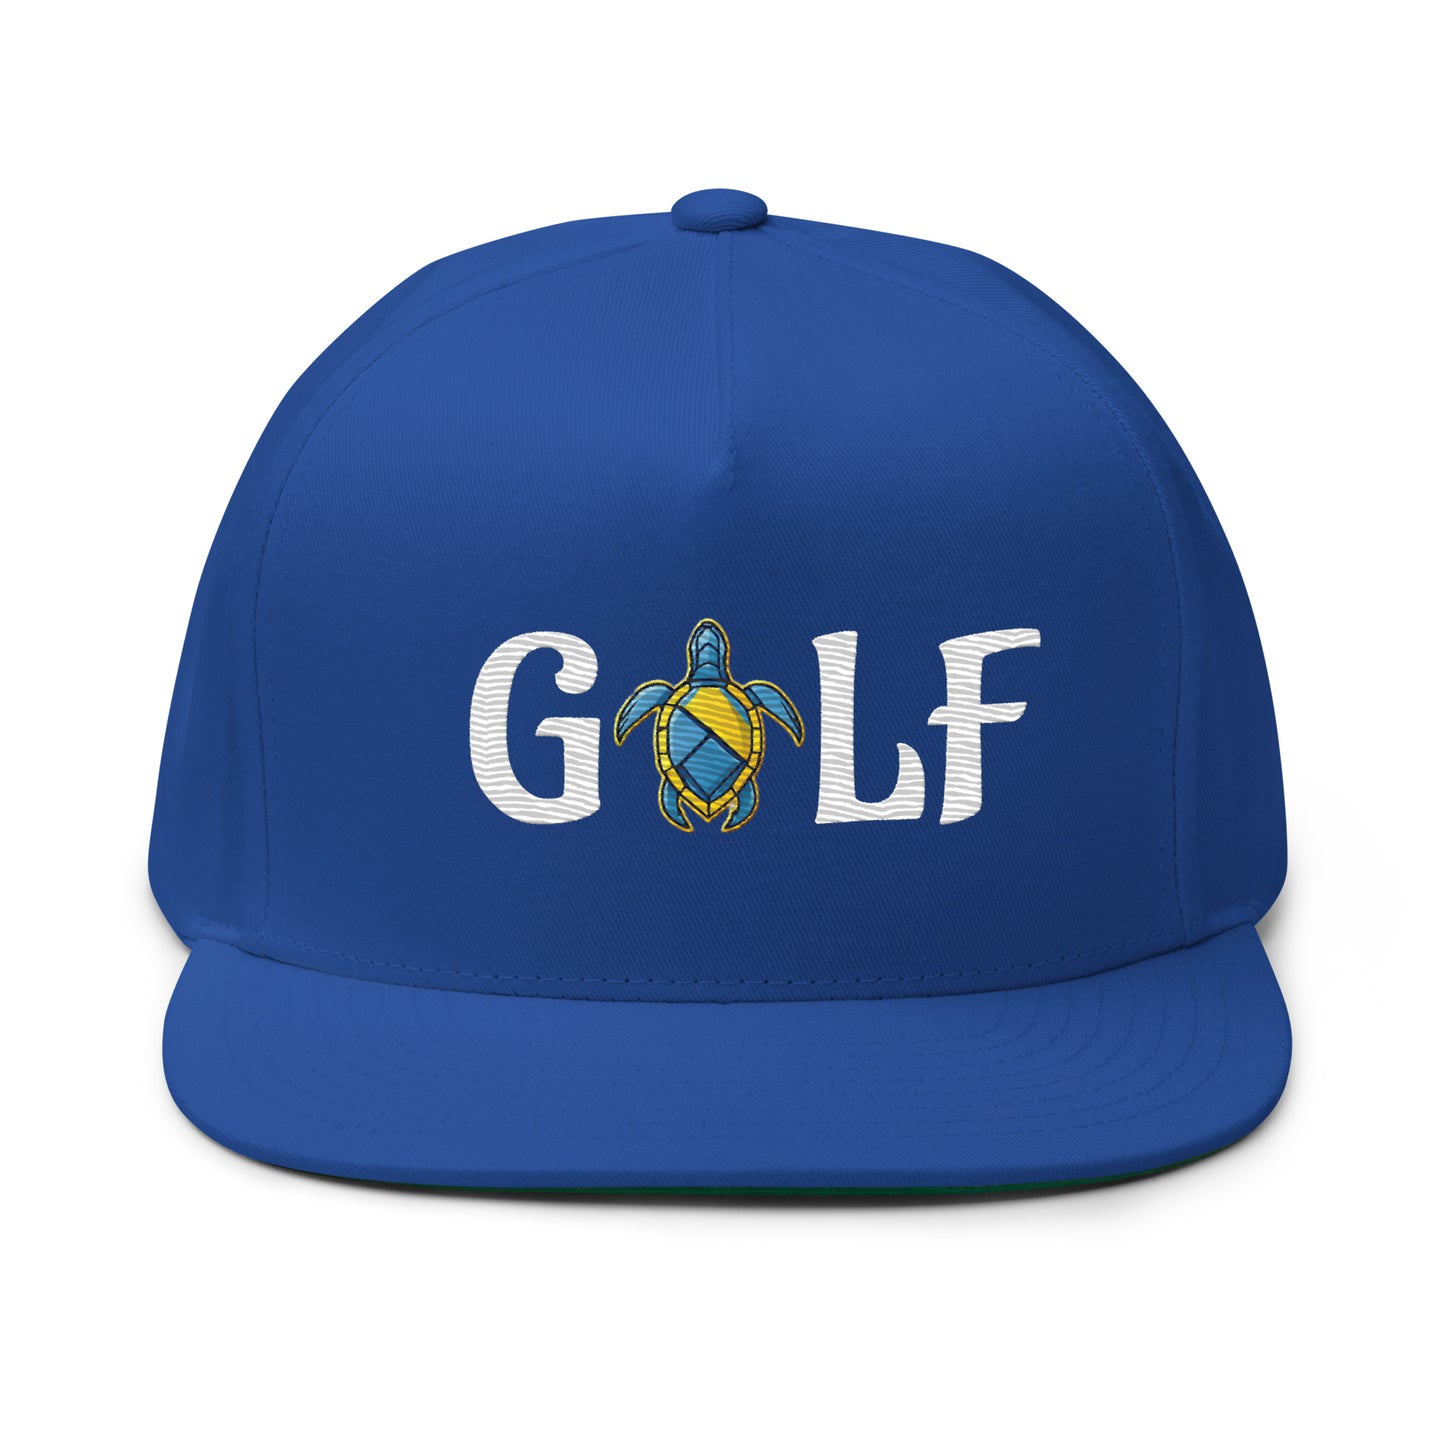 Flat Bill Cap - Golf